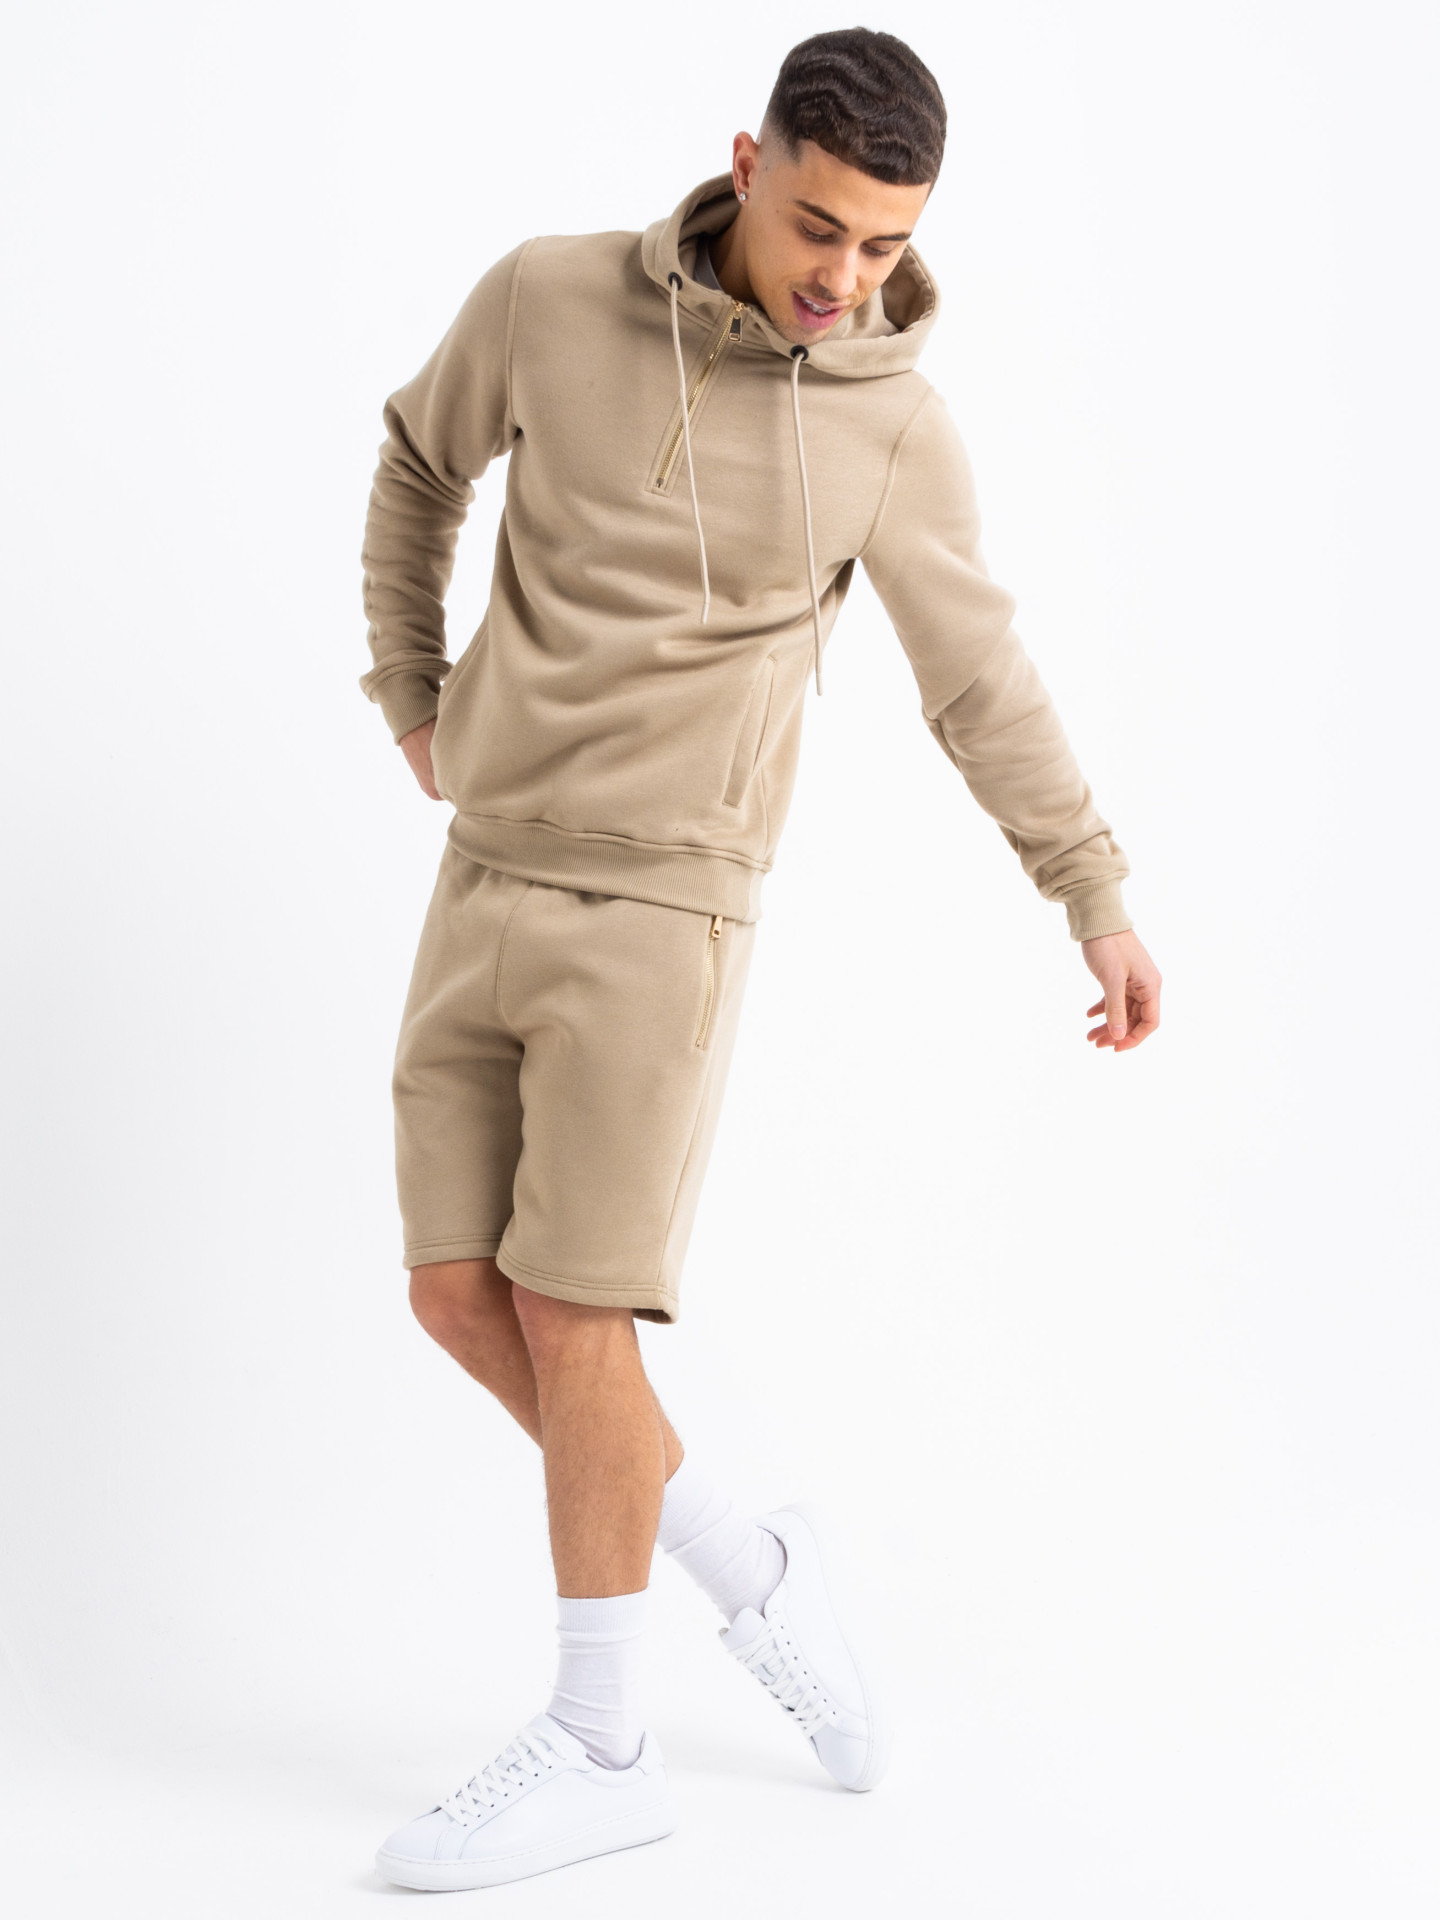 HC Gold Zip Short Beige | Men's Clothing & Fashion | HisColumn